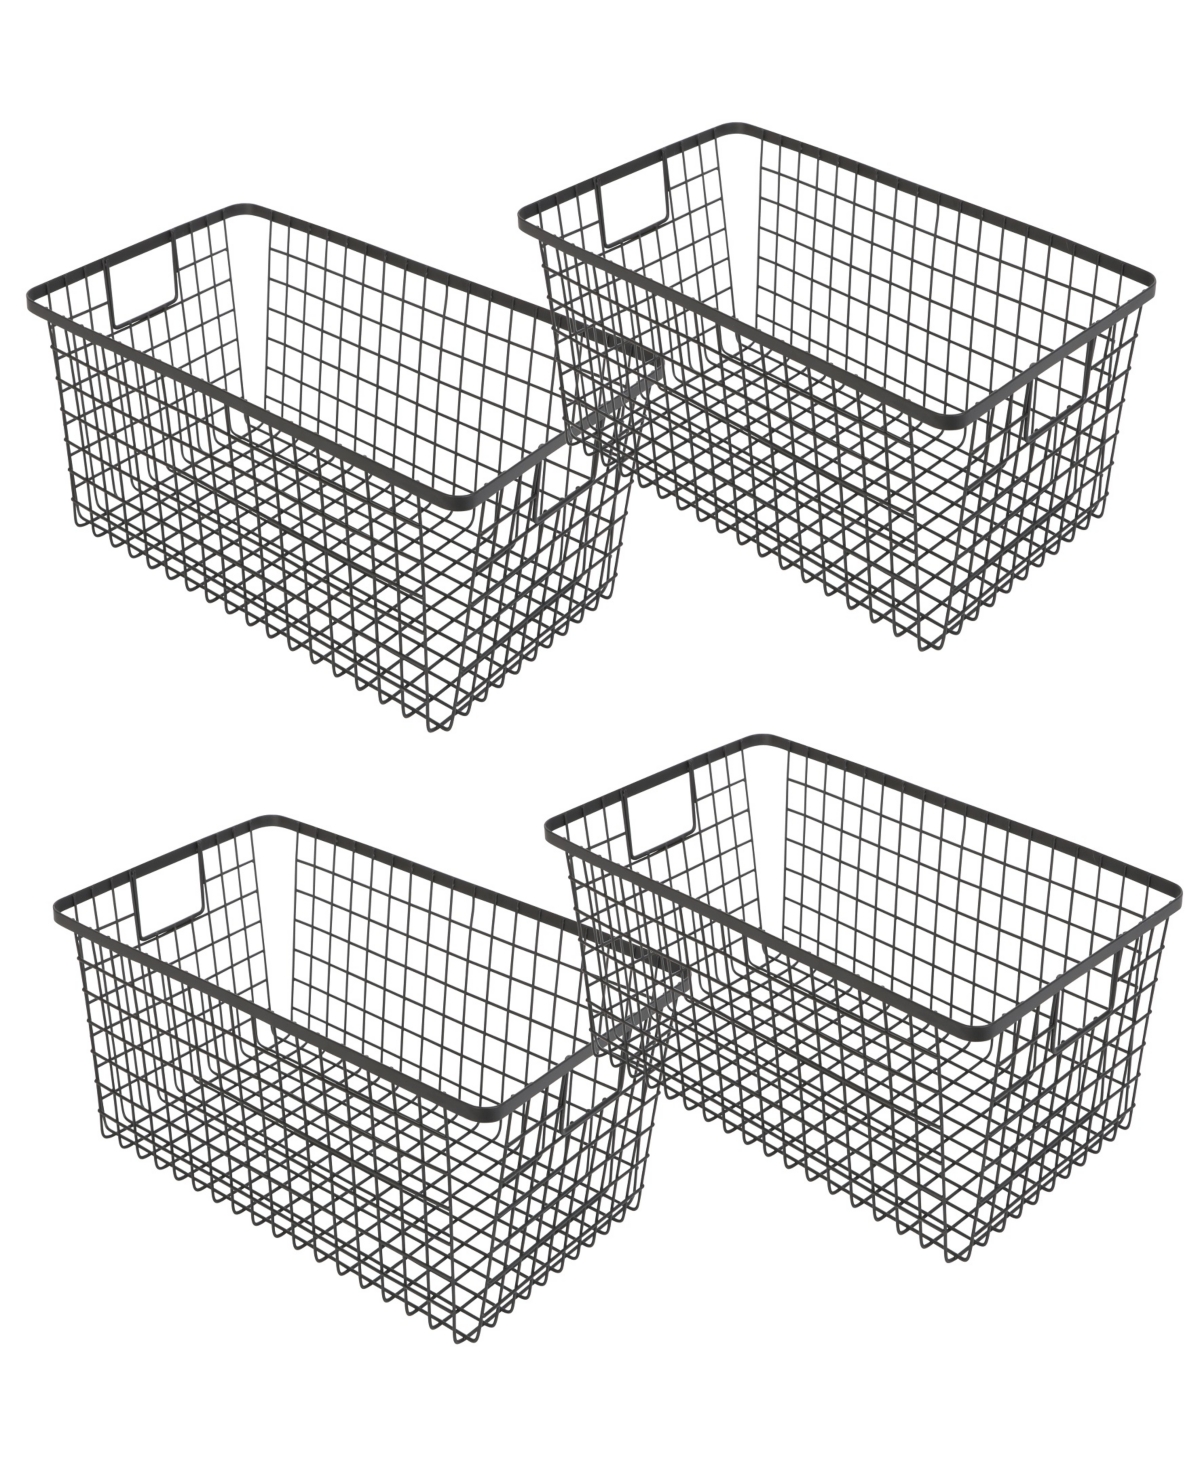 Nestable 9" x 16" x 6" Basket Organizer with Handles, Set of 4 - Black